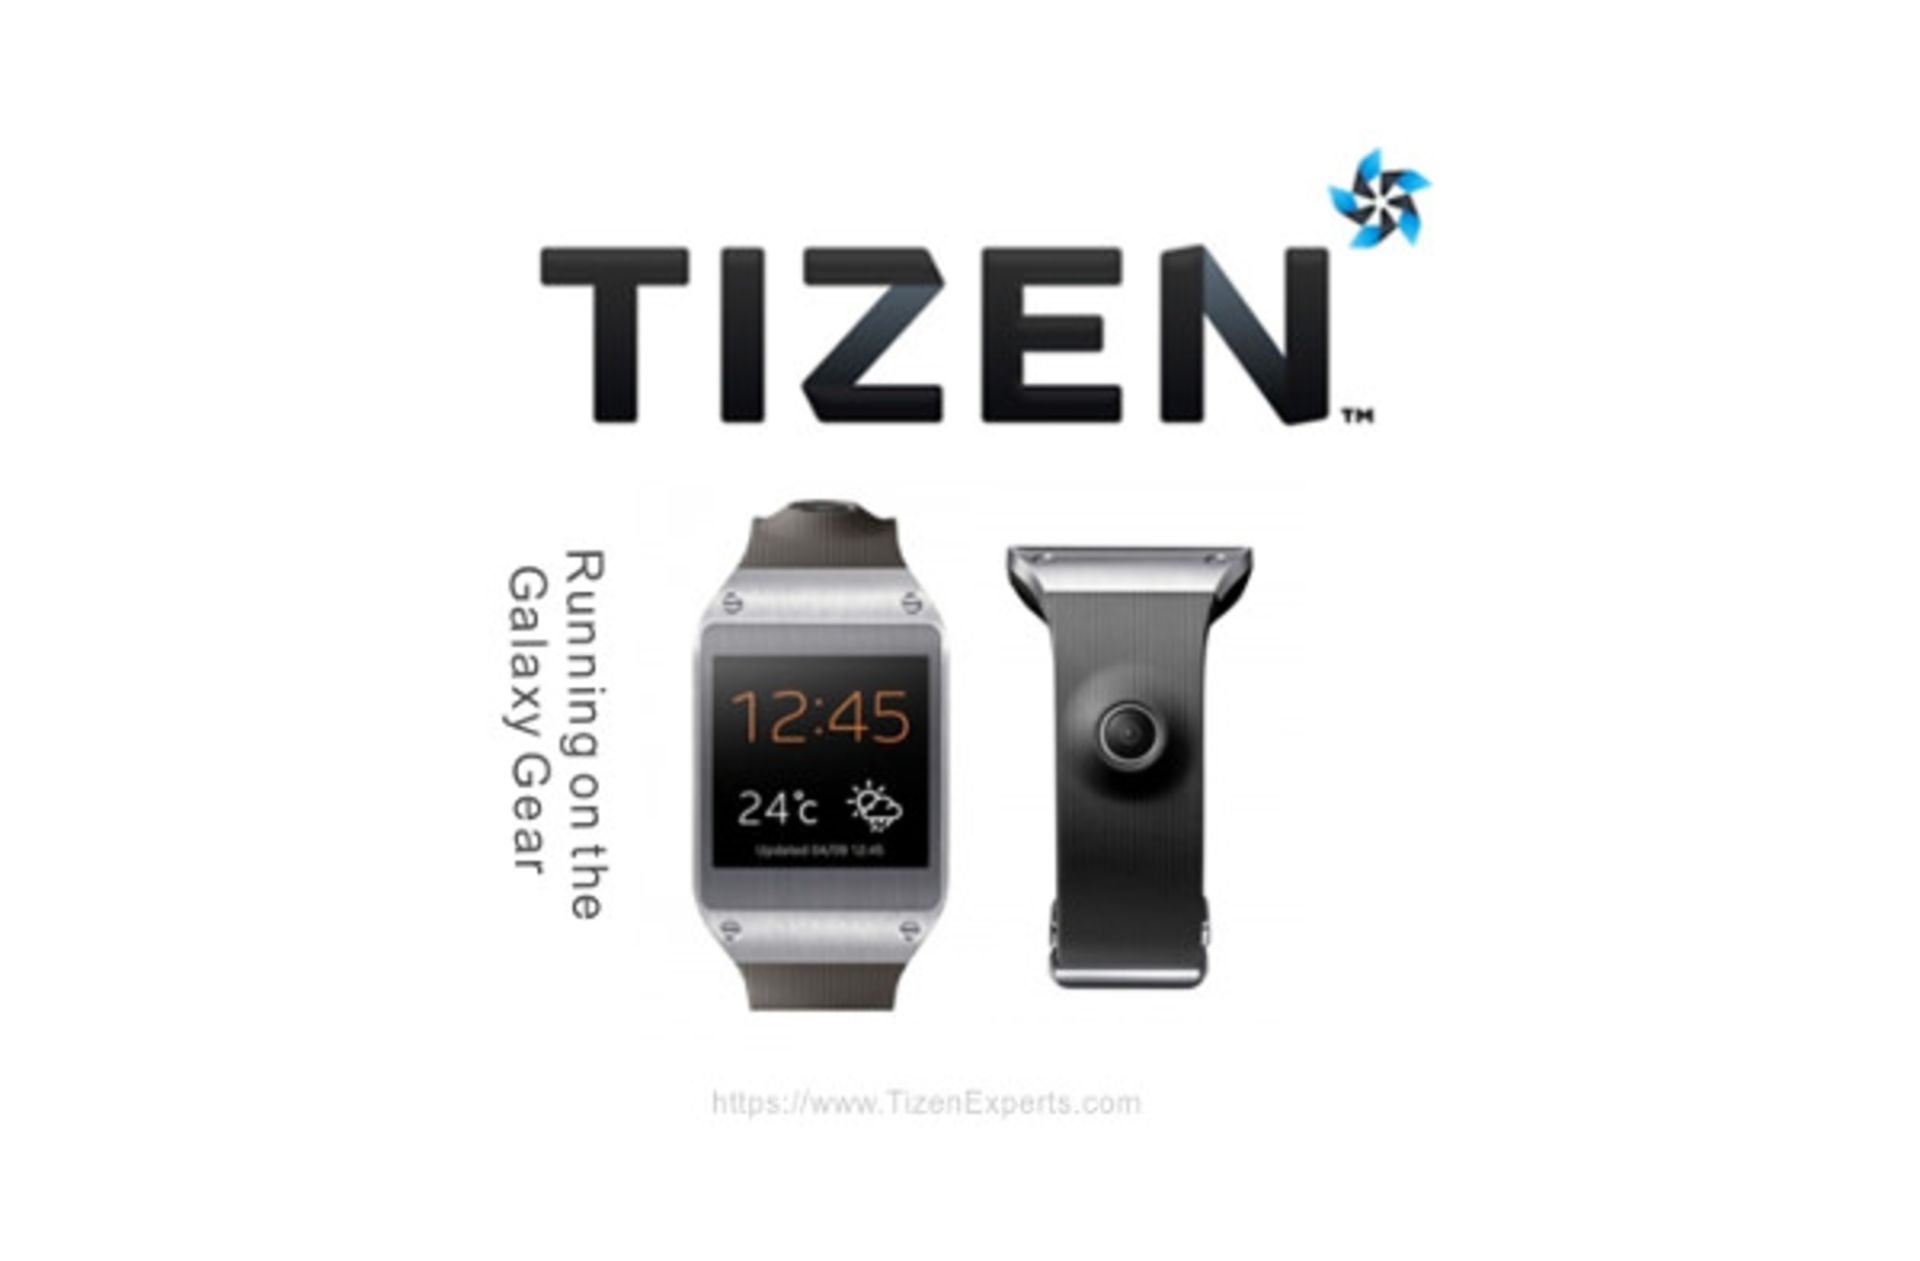 Samsung-Galaxy-Gear-Tizen-TizenExperts-700-460